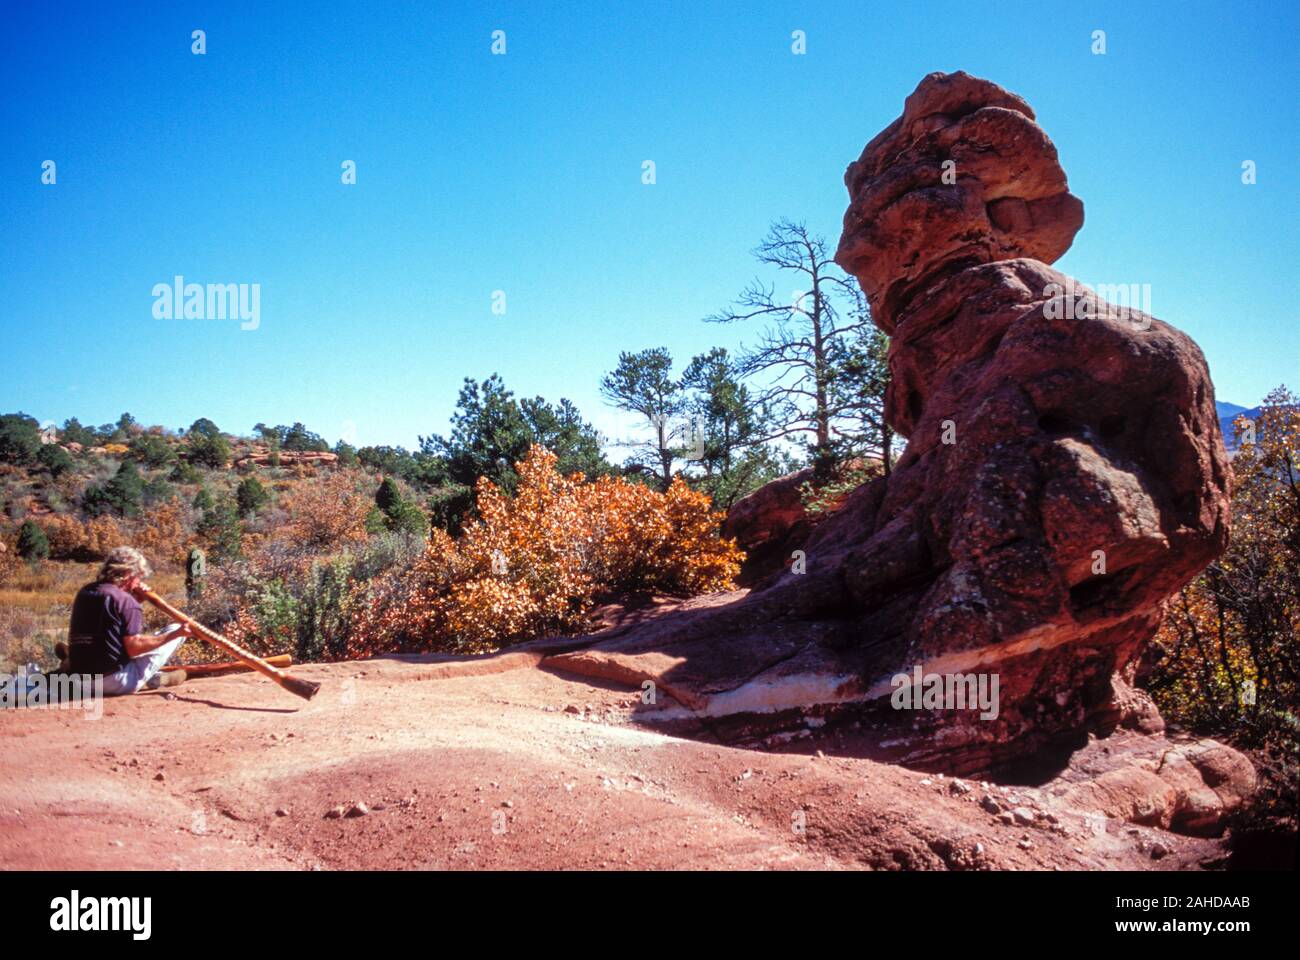 Digideroo player, Scotsman, Garten der Götter, Manitou Springs, Colorado Stockfoto